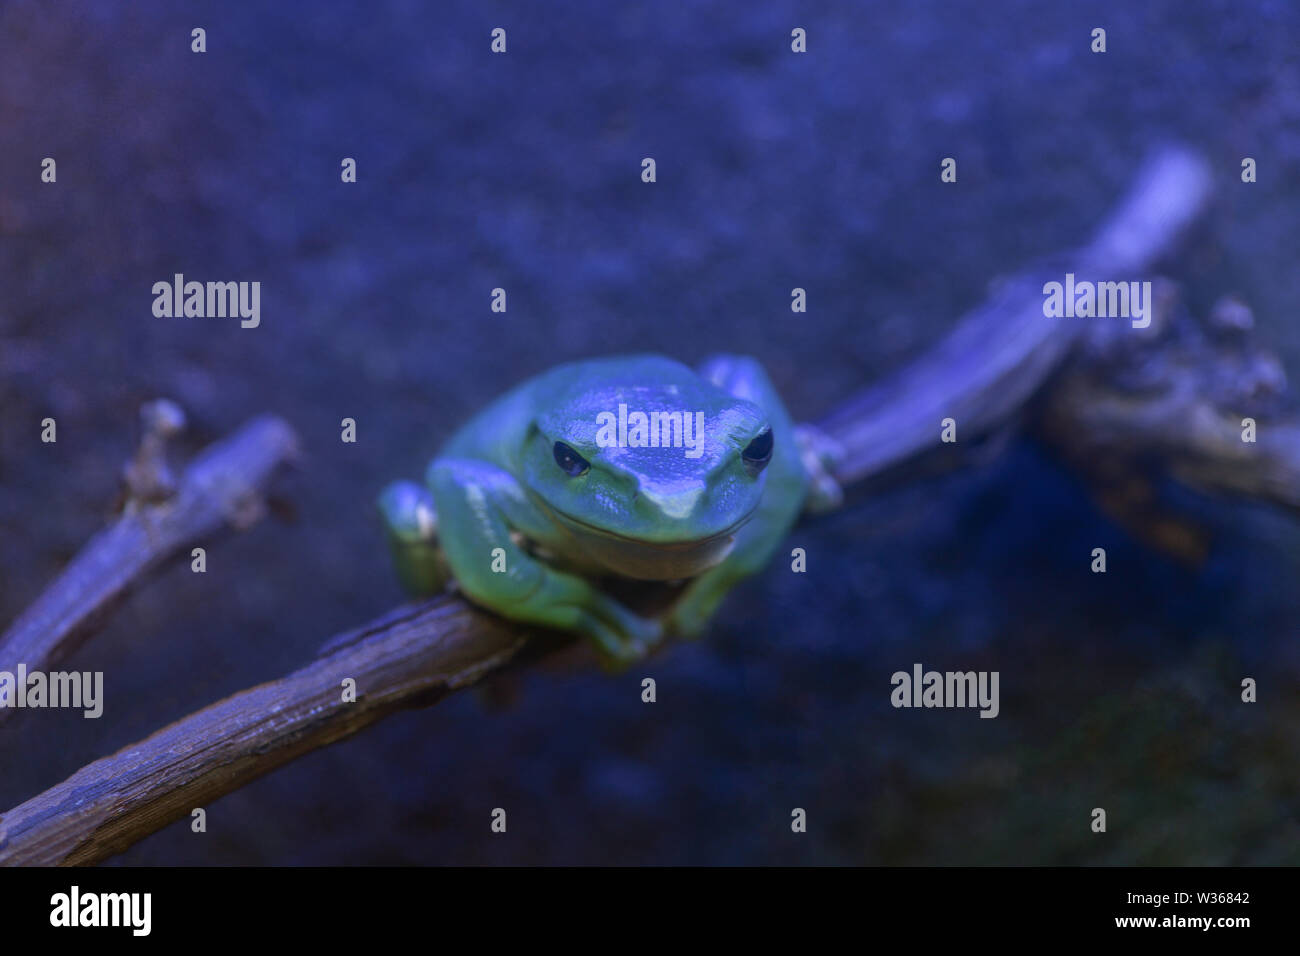 Polypedates dennysii. Green giant copepod, frog sitting on a branch at night in a dark terrarium. Blue tinted aquarium Stock Photo